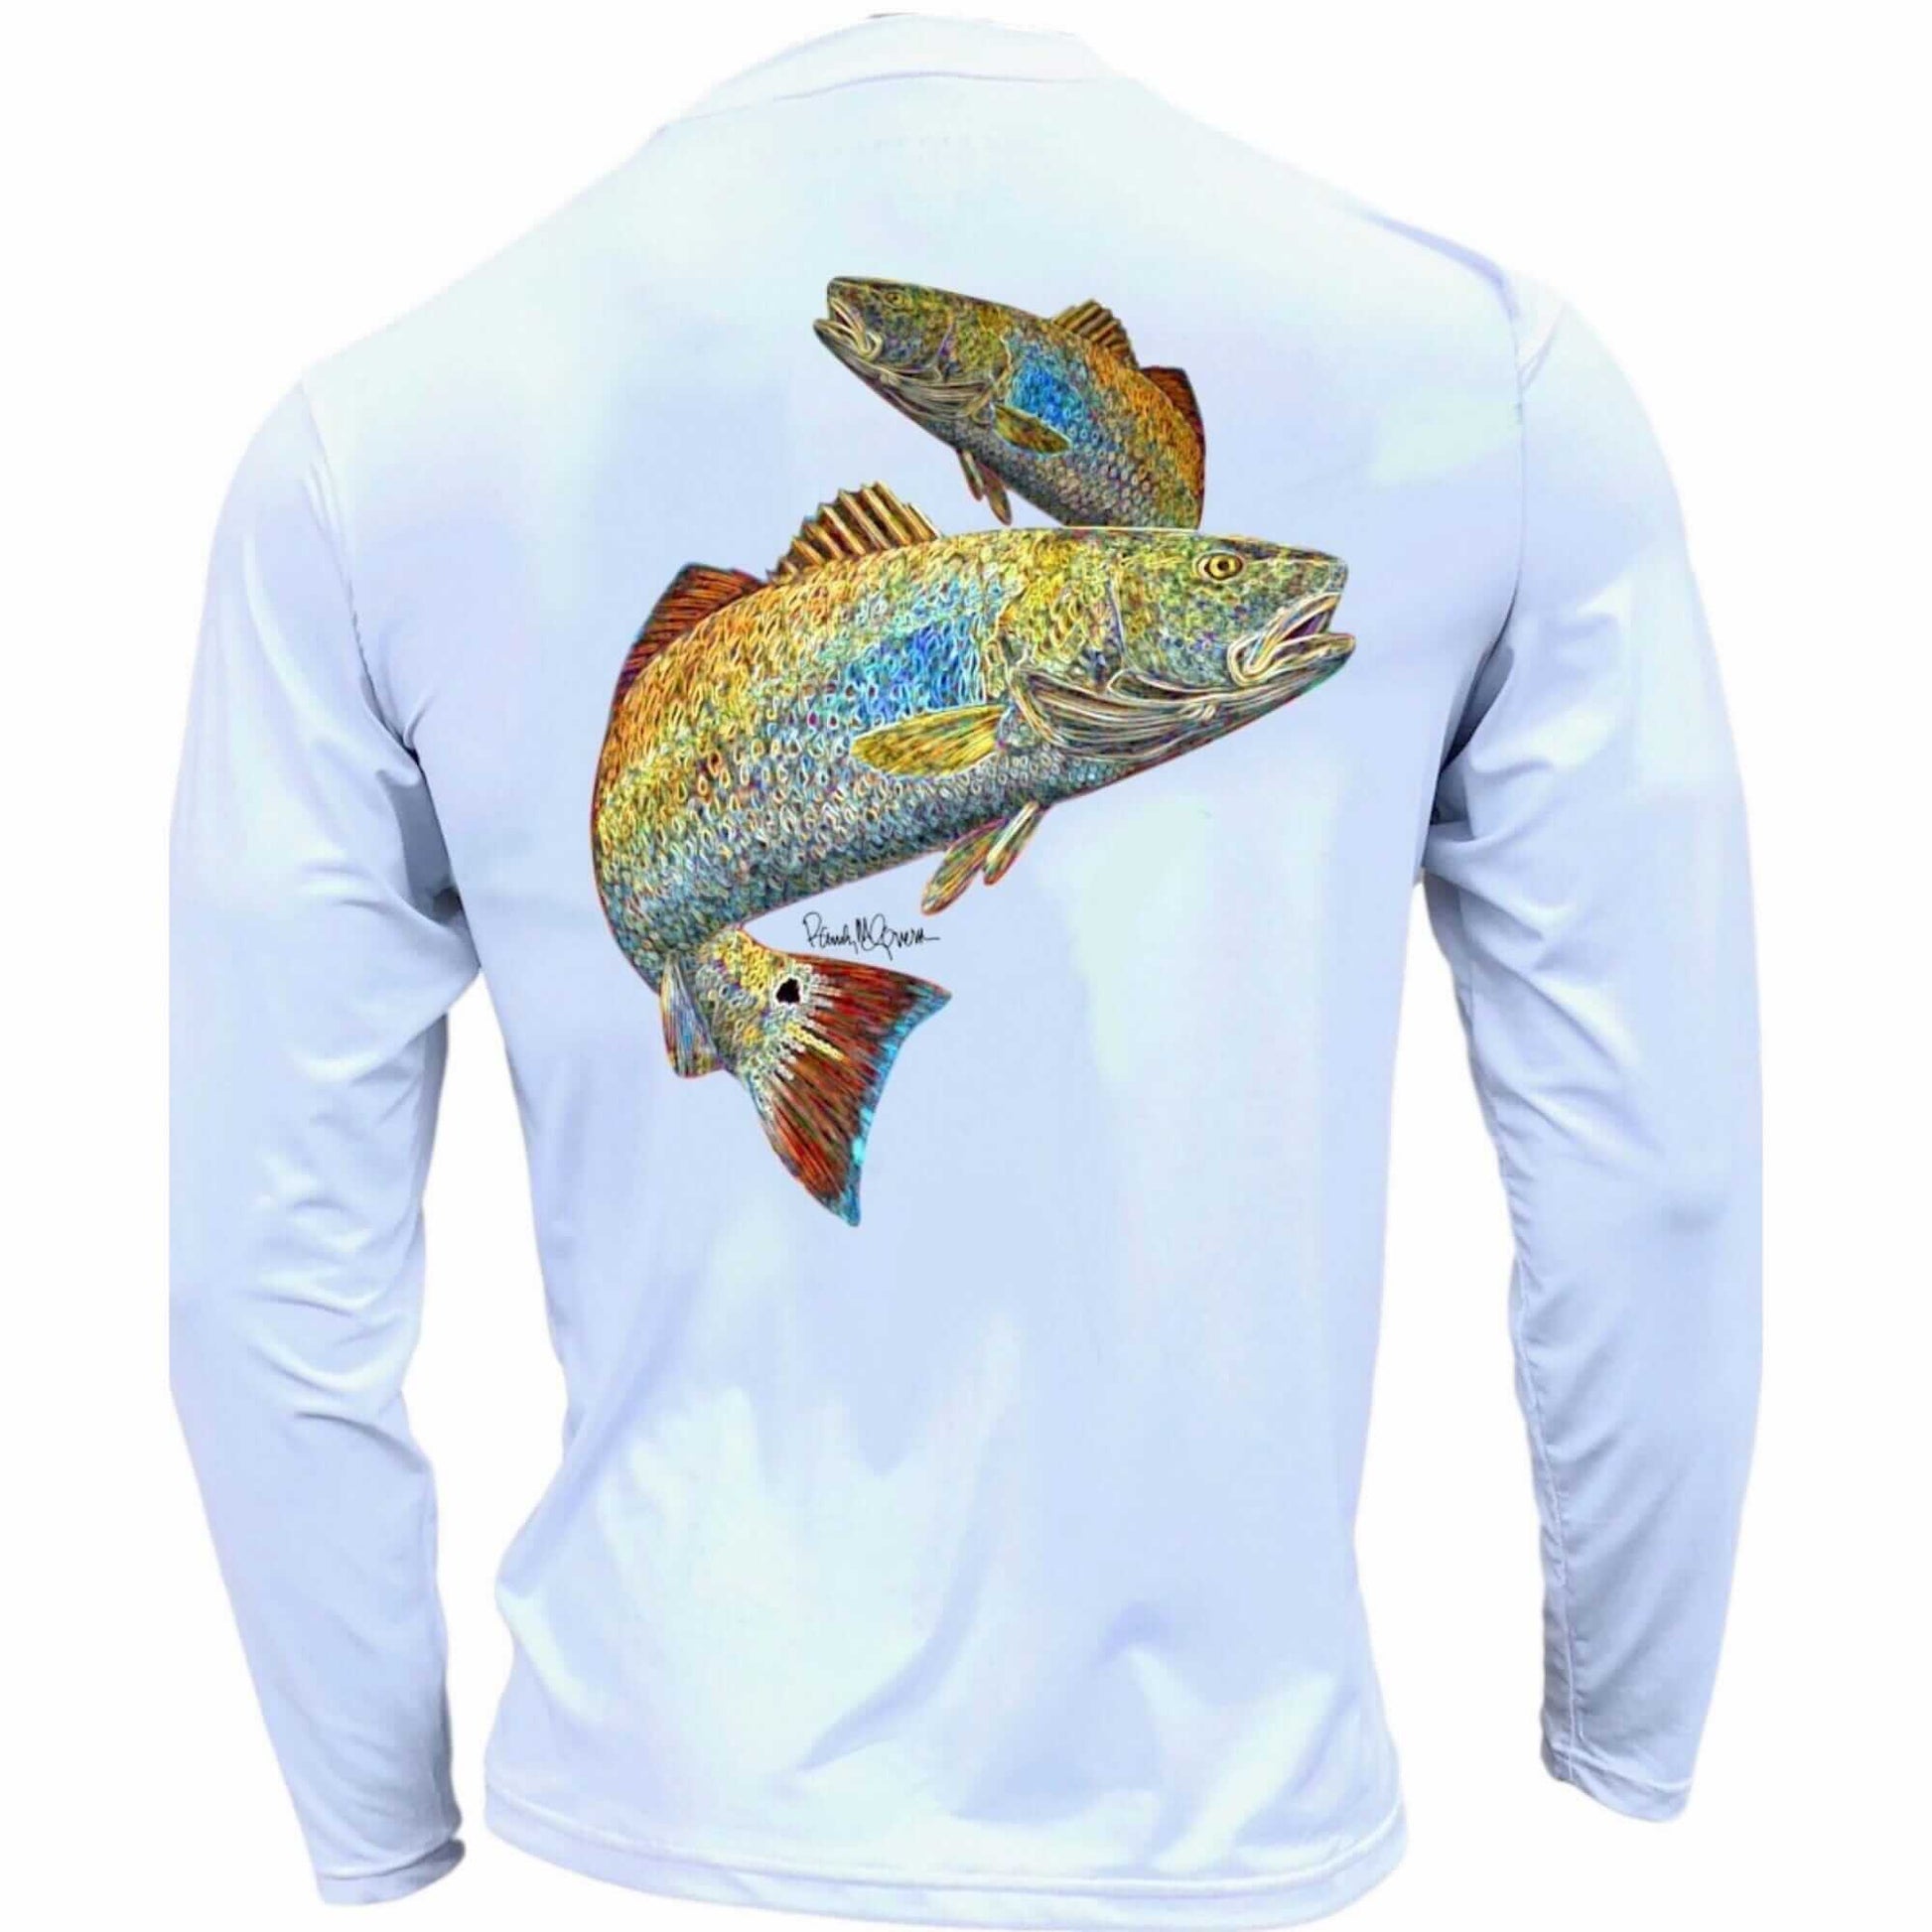 Men's Performance Shirt - Electric Fish – Redfish Men's SPF Ocean Fishing Tops Tormenter Ocean White S 